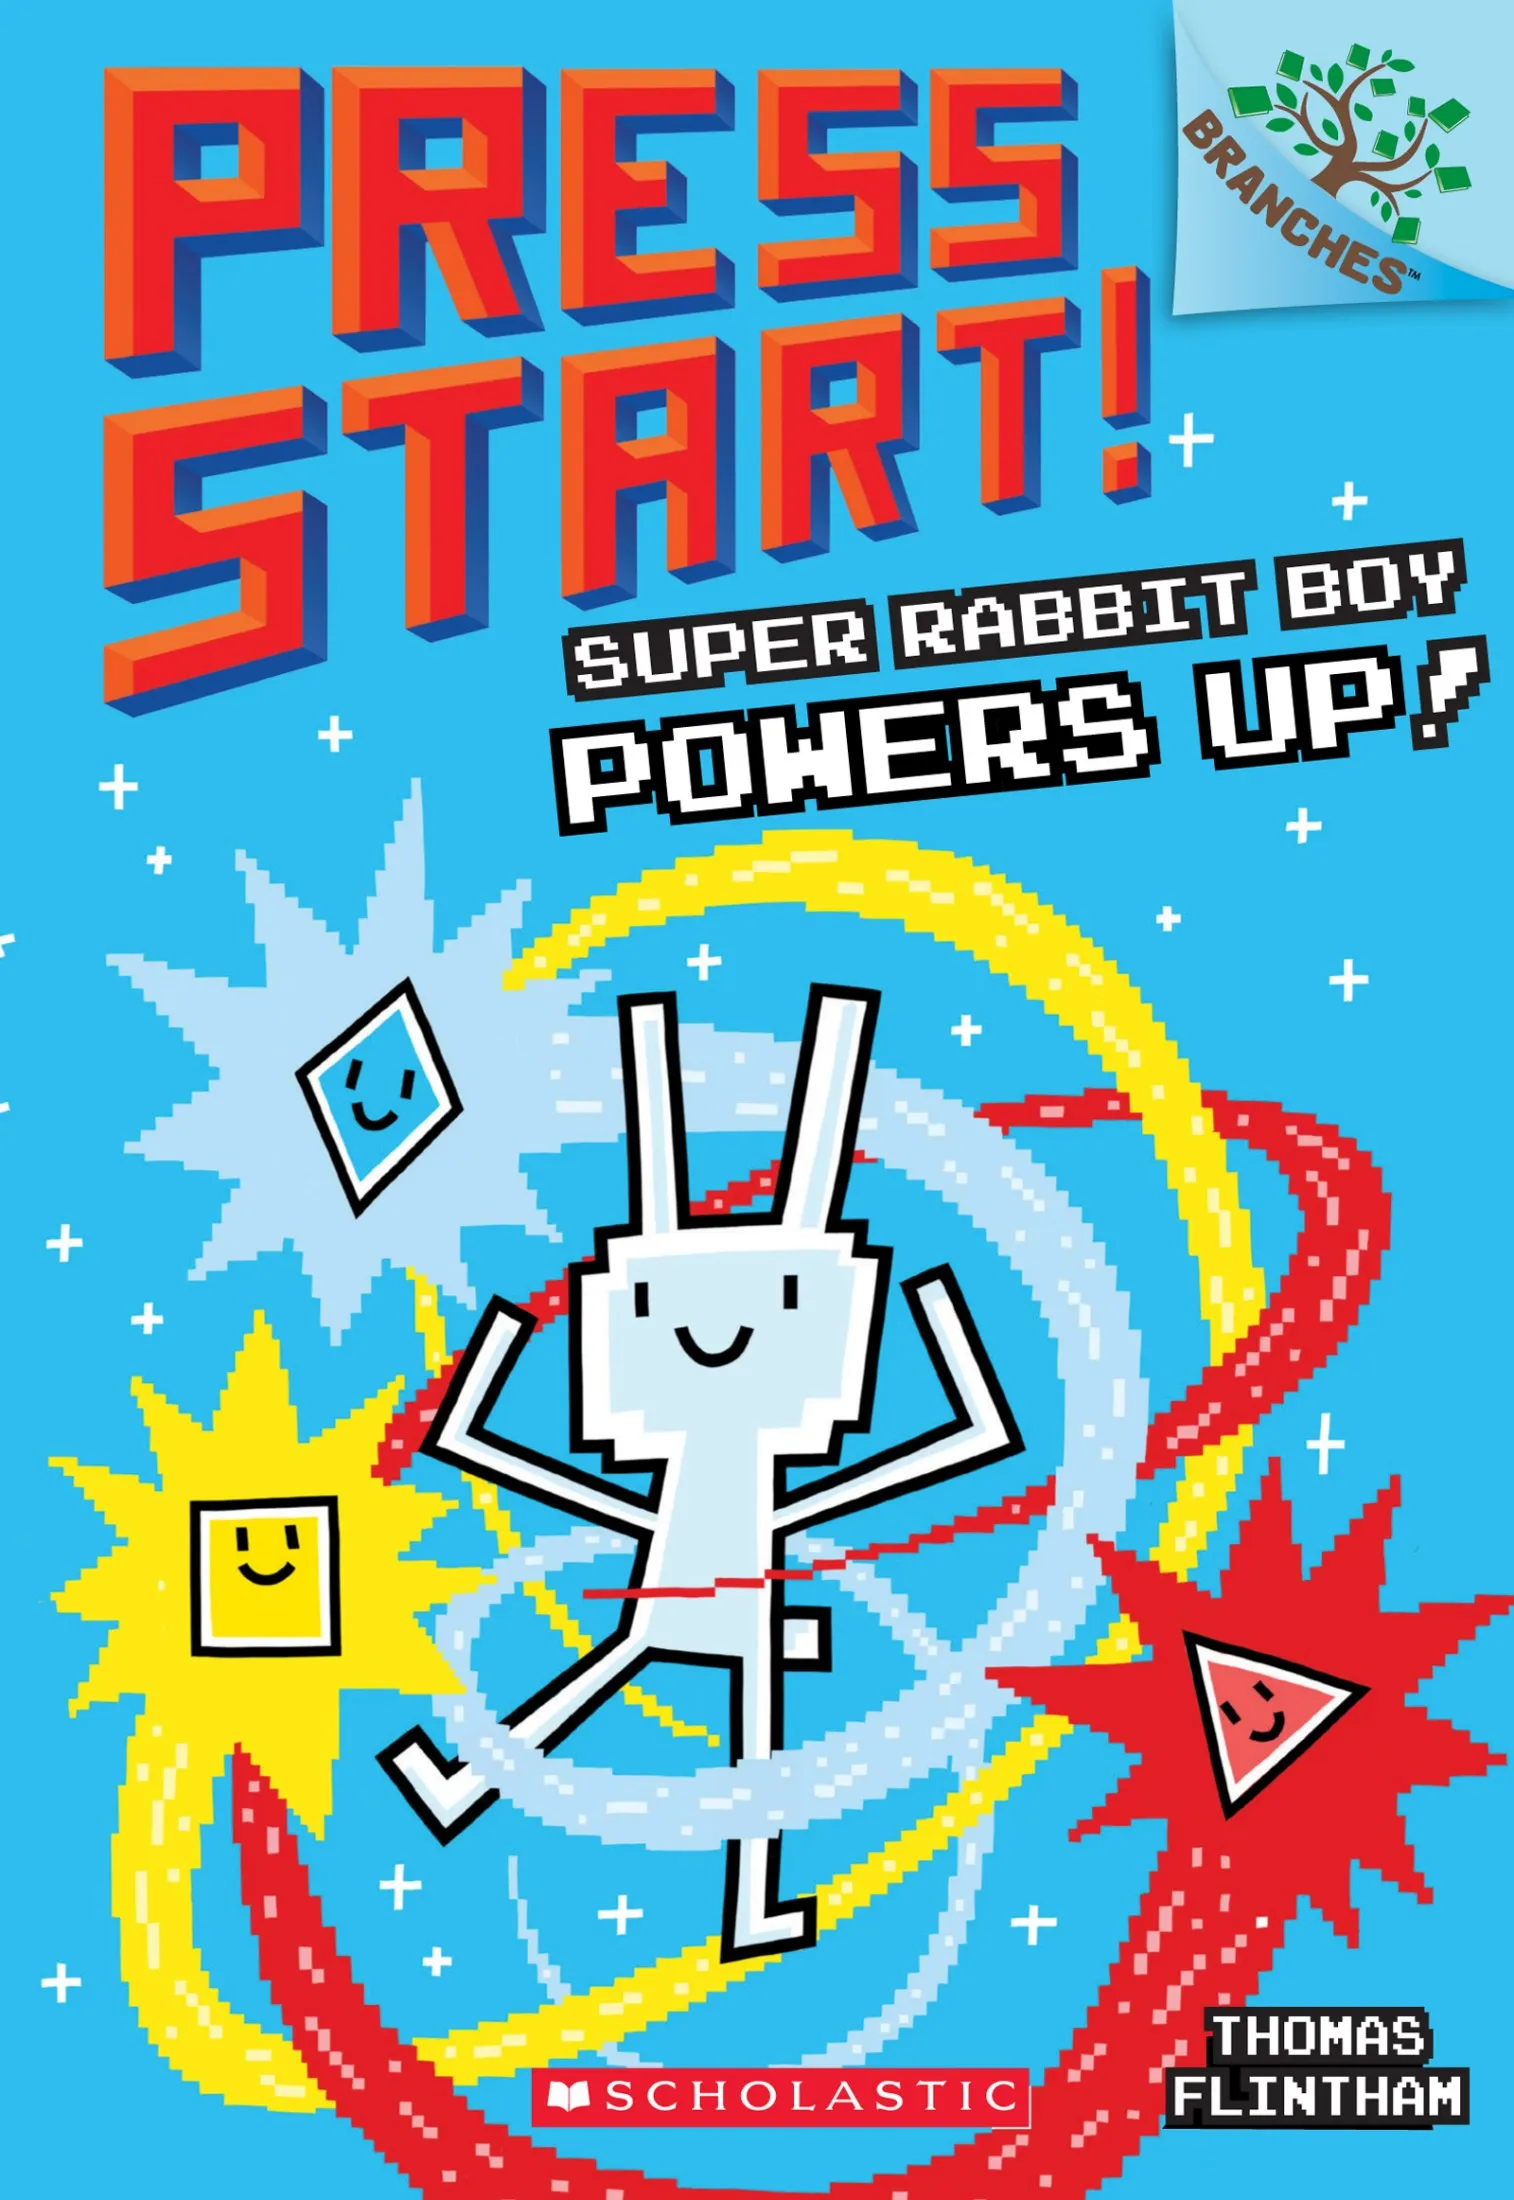 Super Rabbit Boy Powers Up! (Press Start! #2)